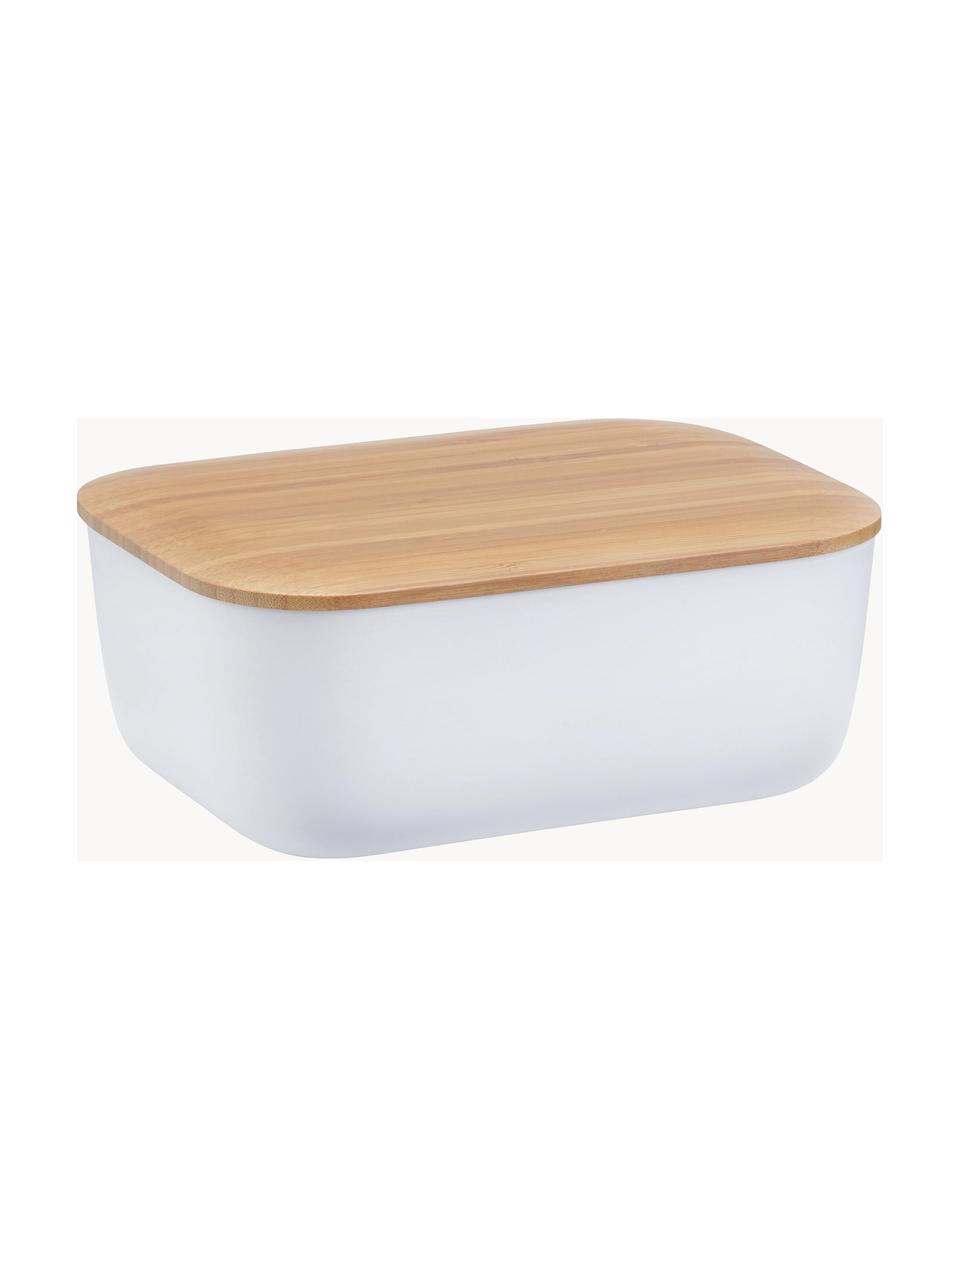 Butterdose Box-It mit Bambus-Deckel, Dose: Melamin, Deckel: Bambus, Weiß, Helles Holz, B 15 x H 7 cm